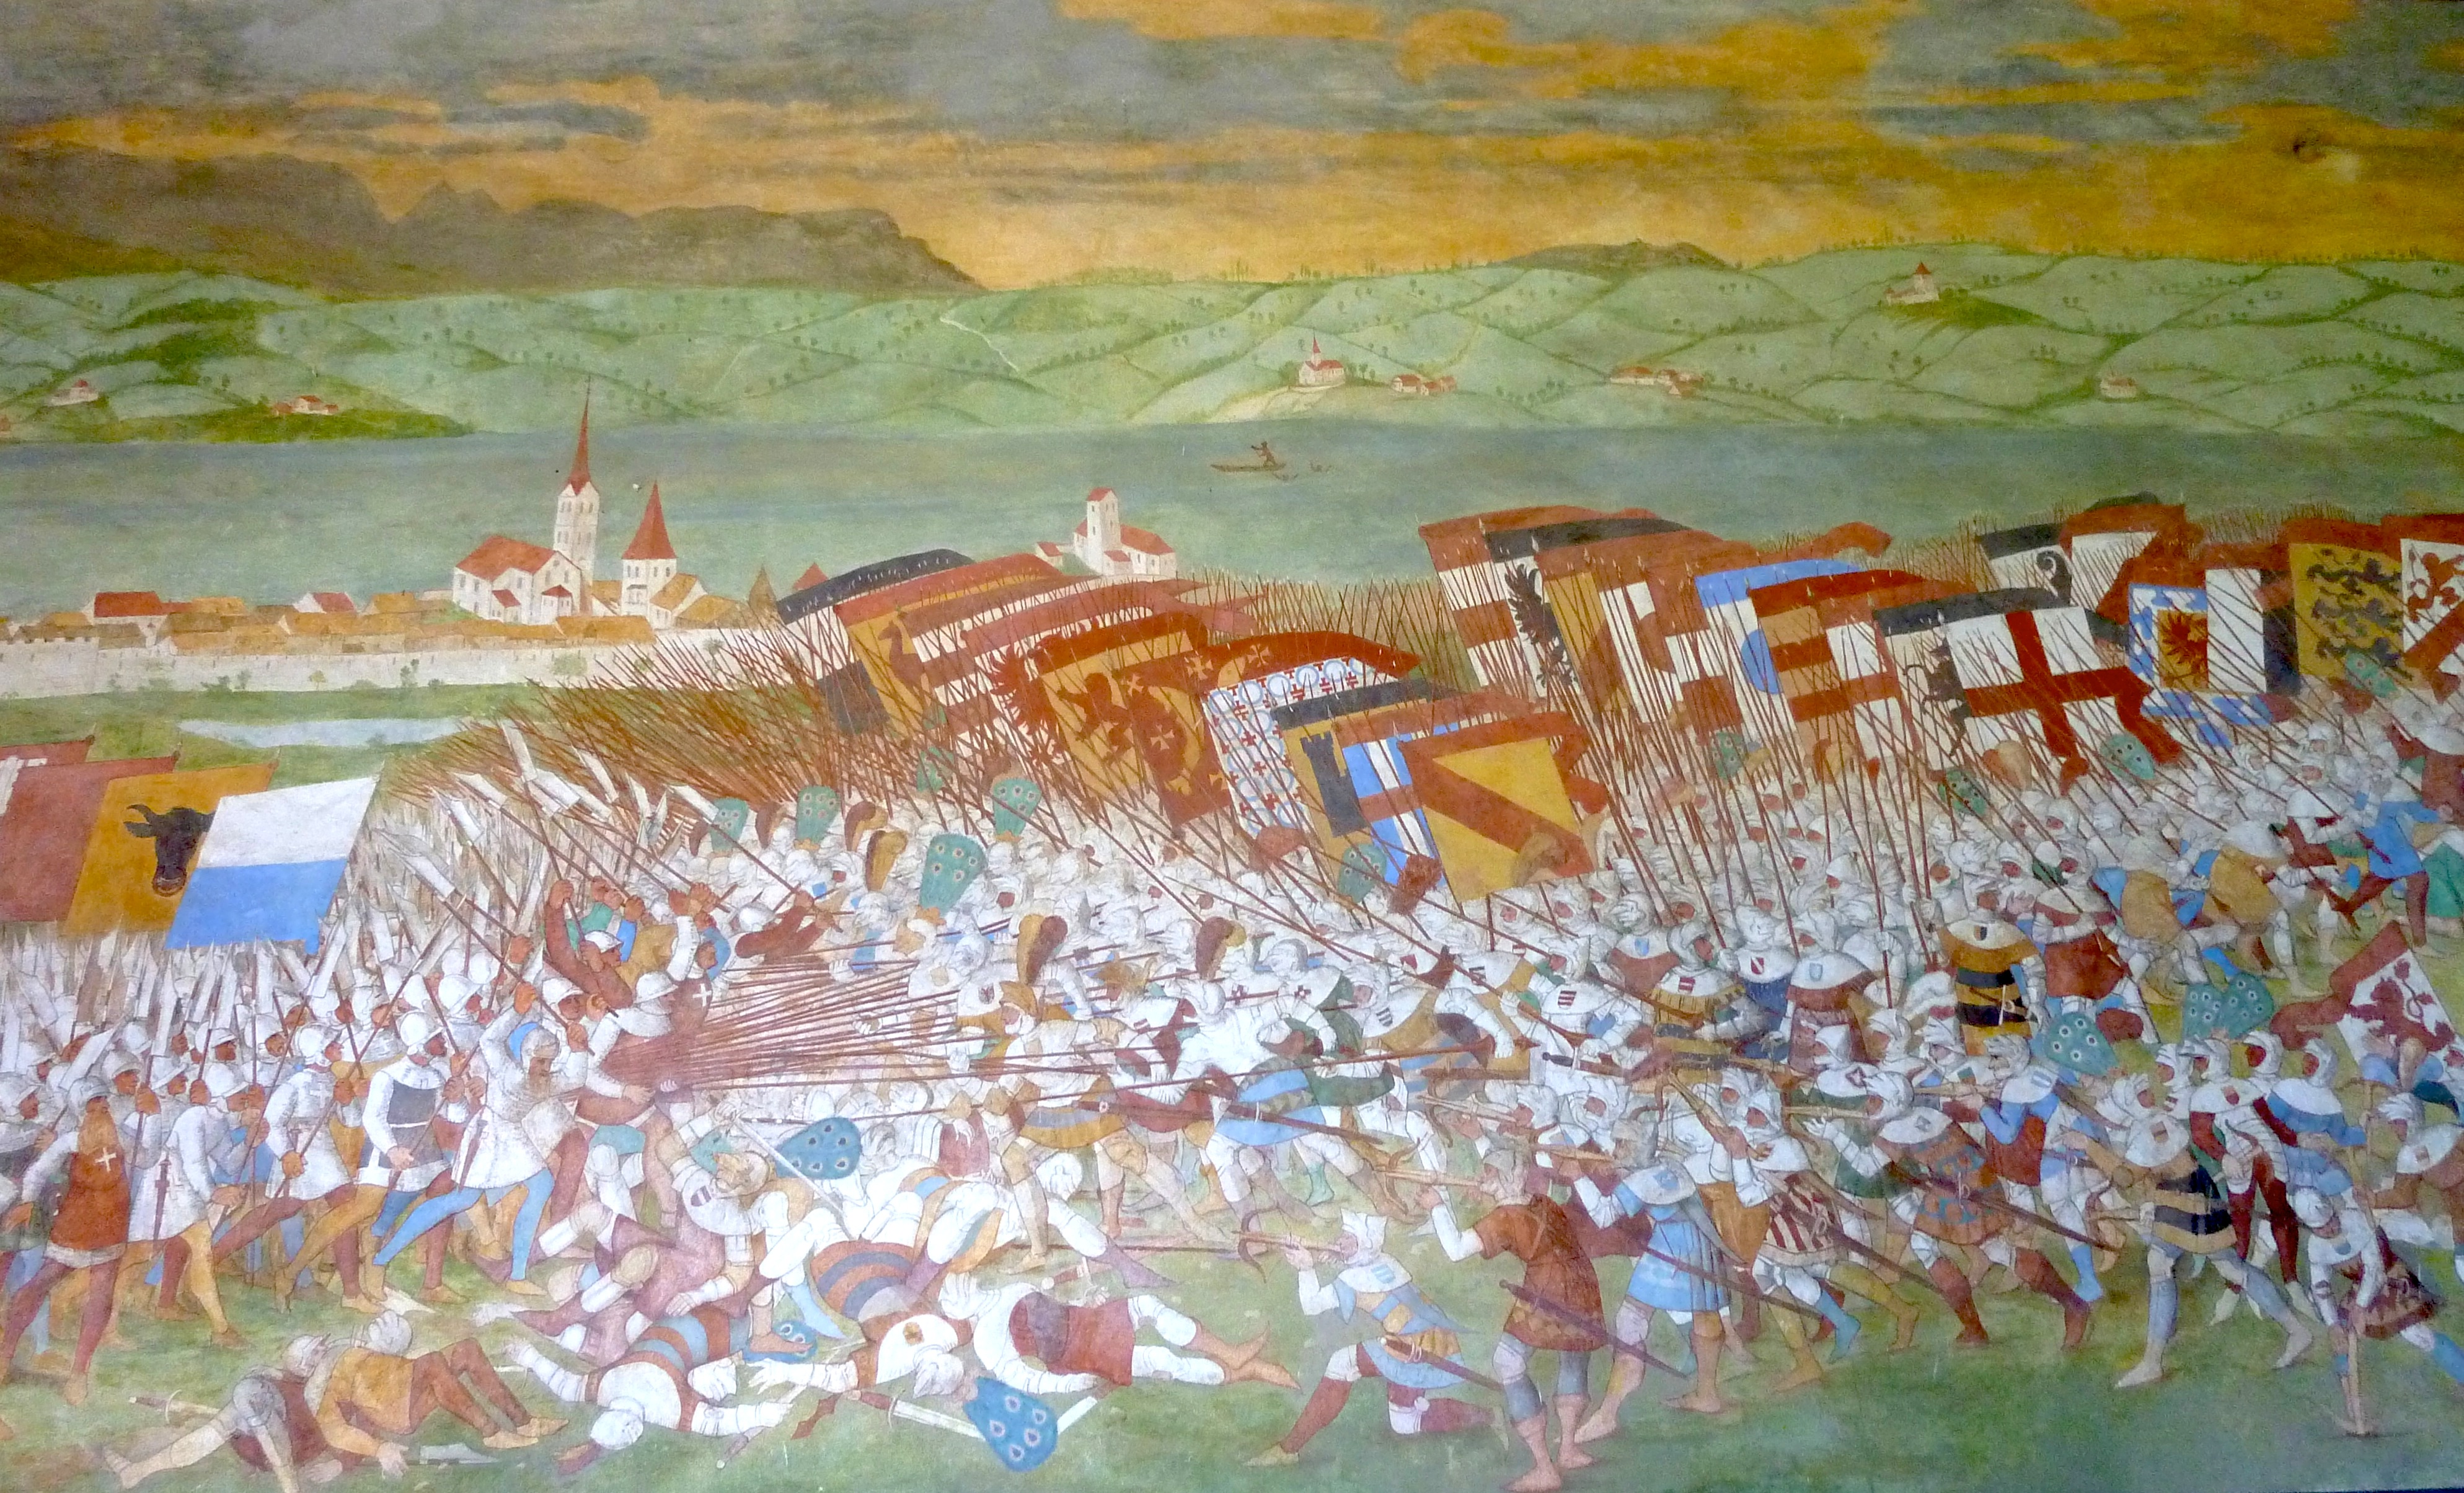 Schlacht bei Sempach (1386). (Quelle: Wikimedia Commons)